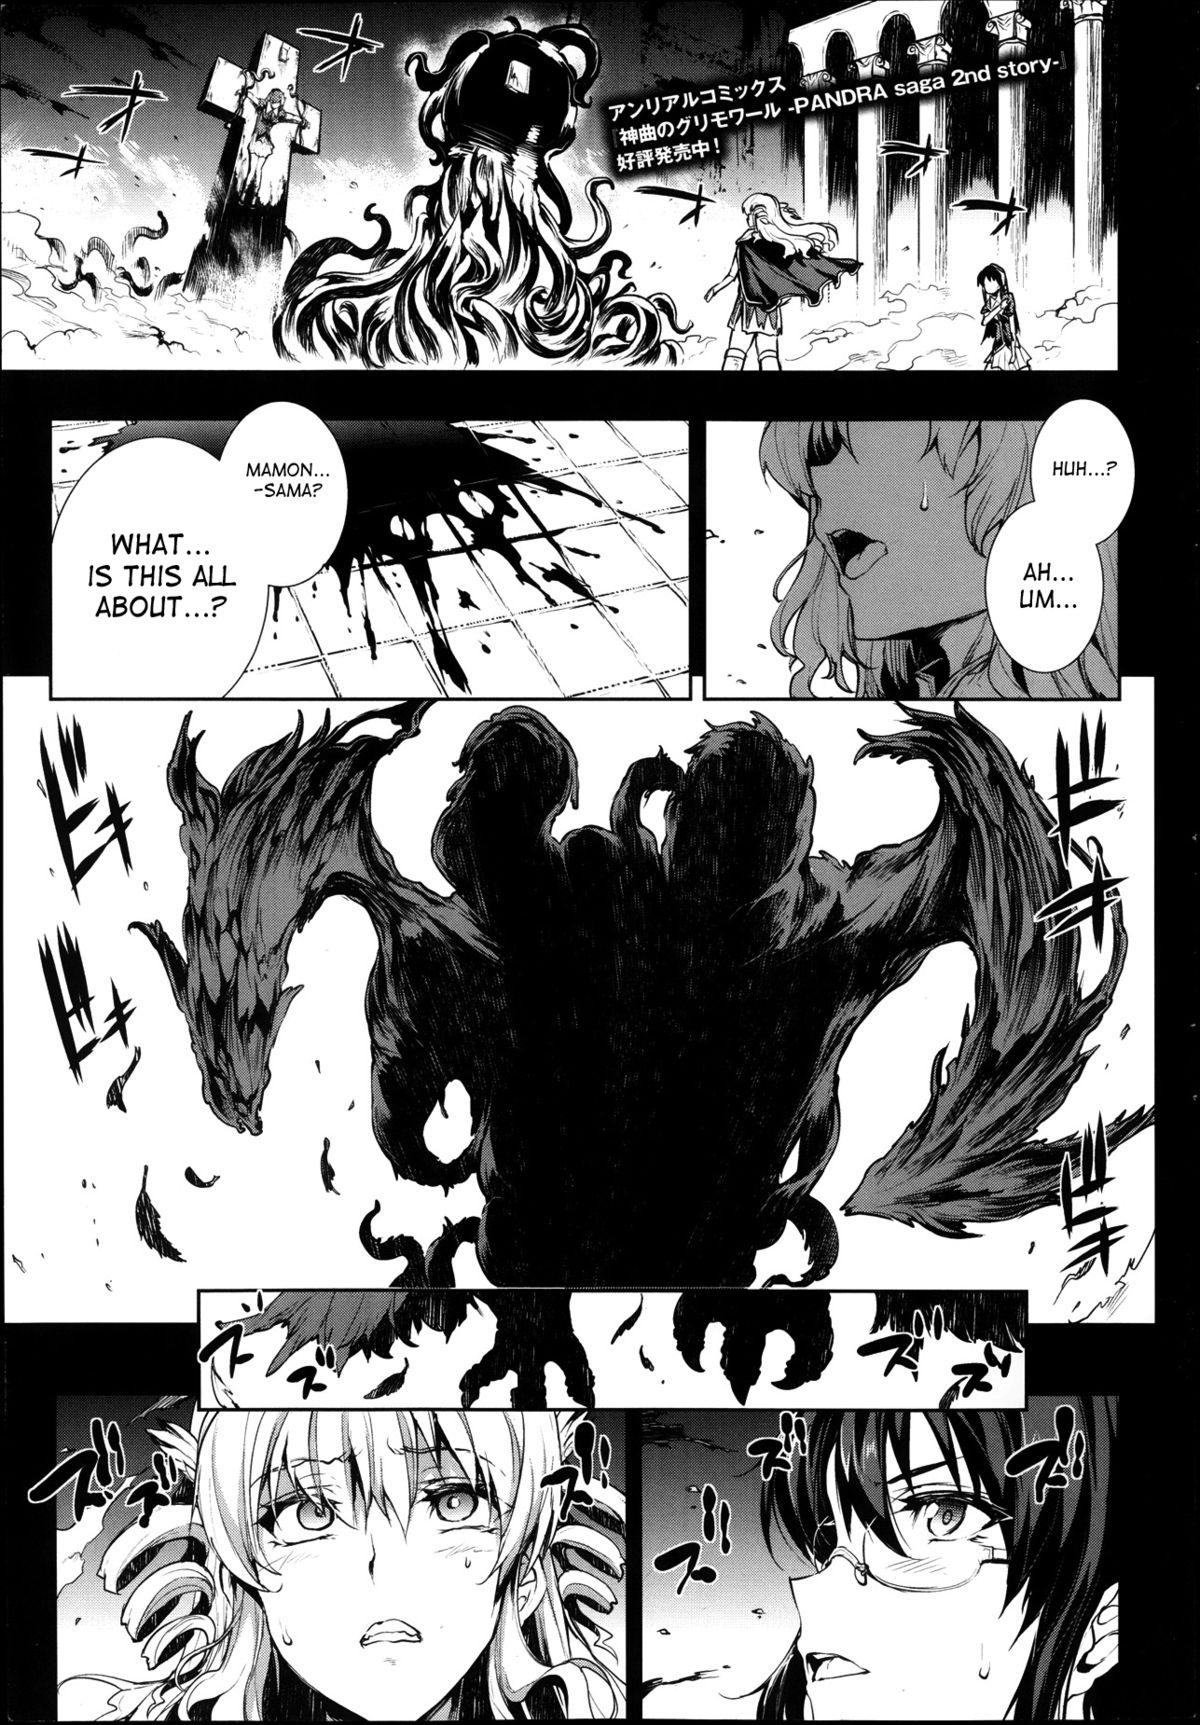 [Erect Sawaru] Shinkyoku no Grimoire -PANDRA saga 2nd story- Ch. 1-17 + Side Story x 3 [English] [SaHa] 248